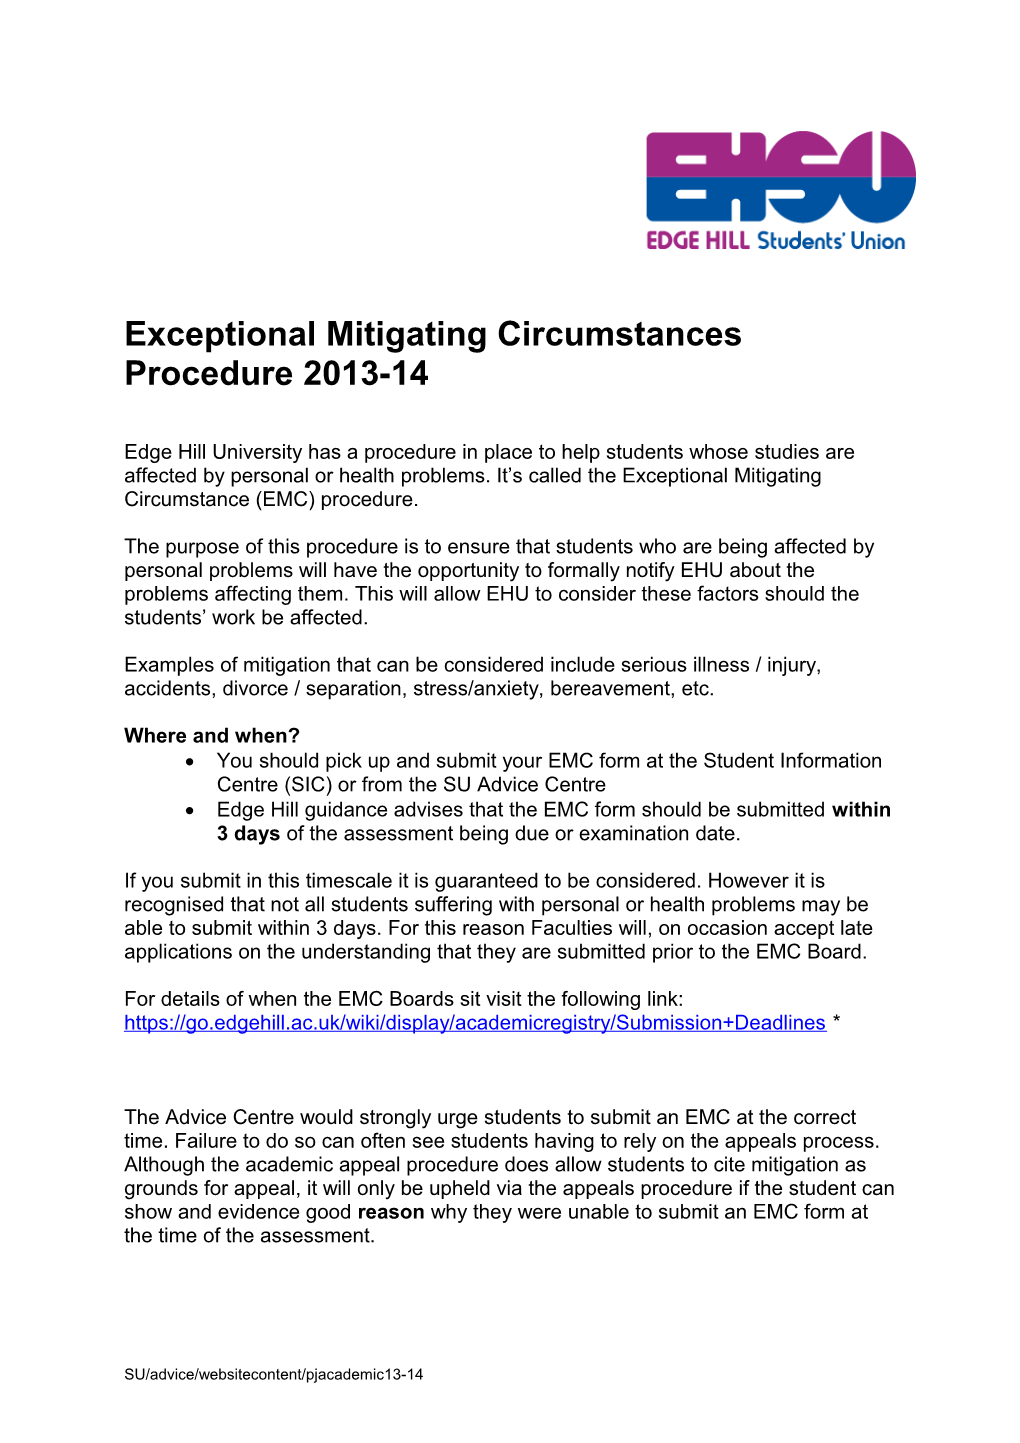 Exceptional Mitigating Circumstances Procedure 2013-14